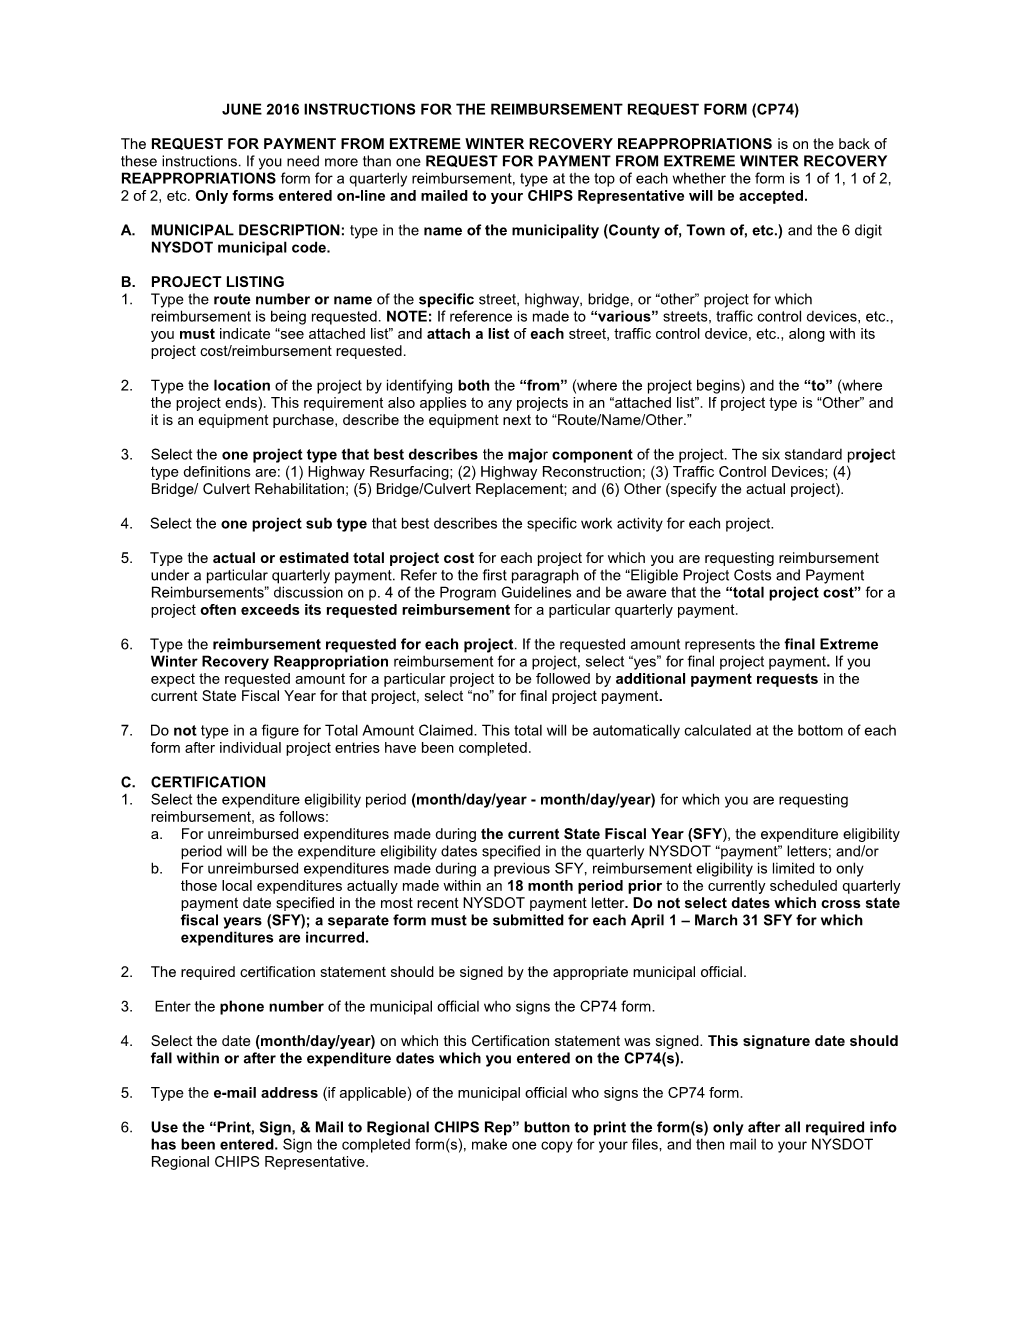 June 2016 Instructions for the Reimbursement Request Form (Cp74)